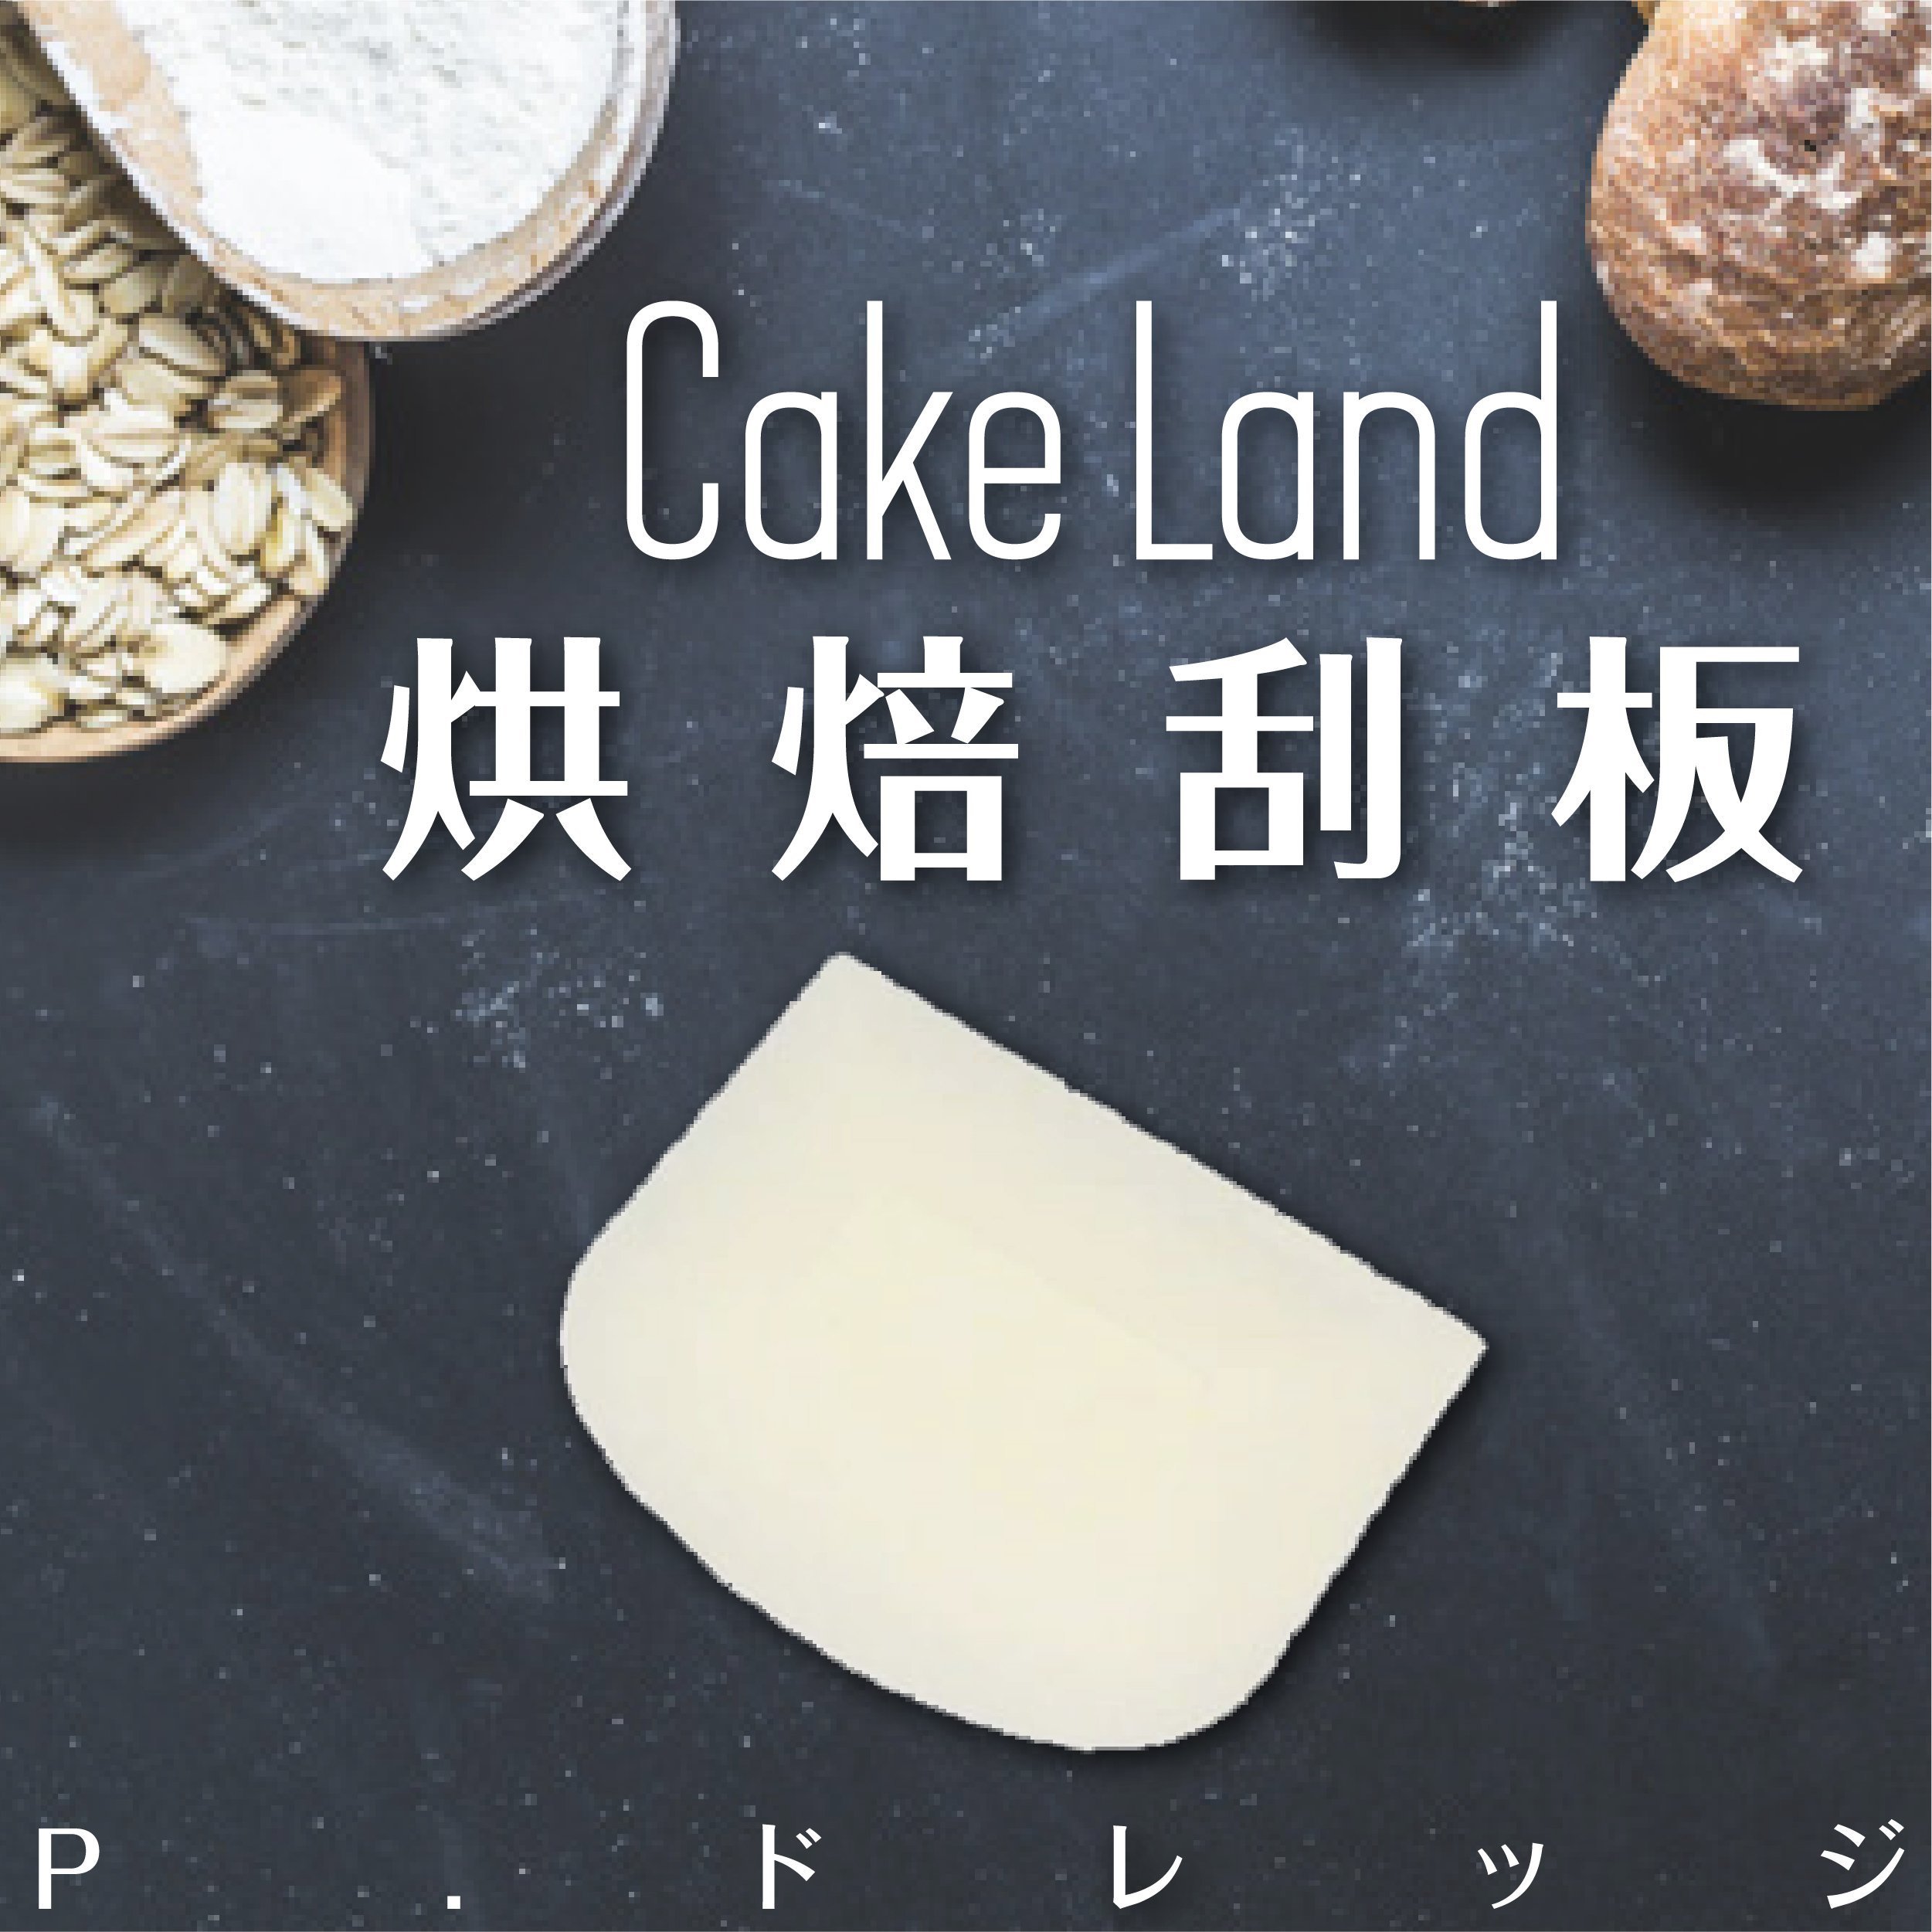 日本【Cake Land】烘焙刮板